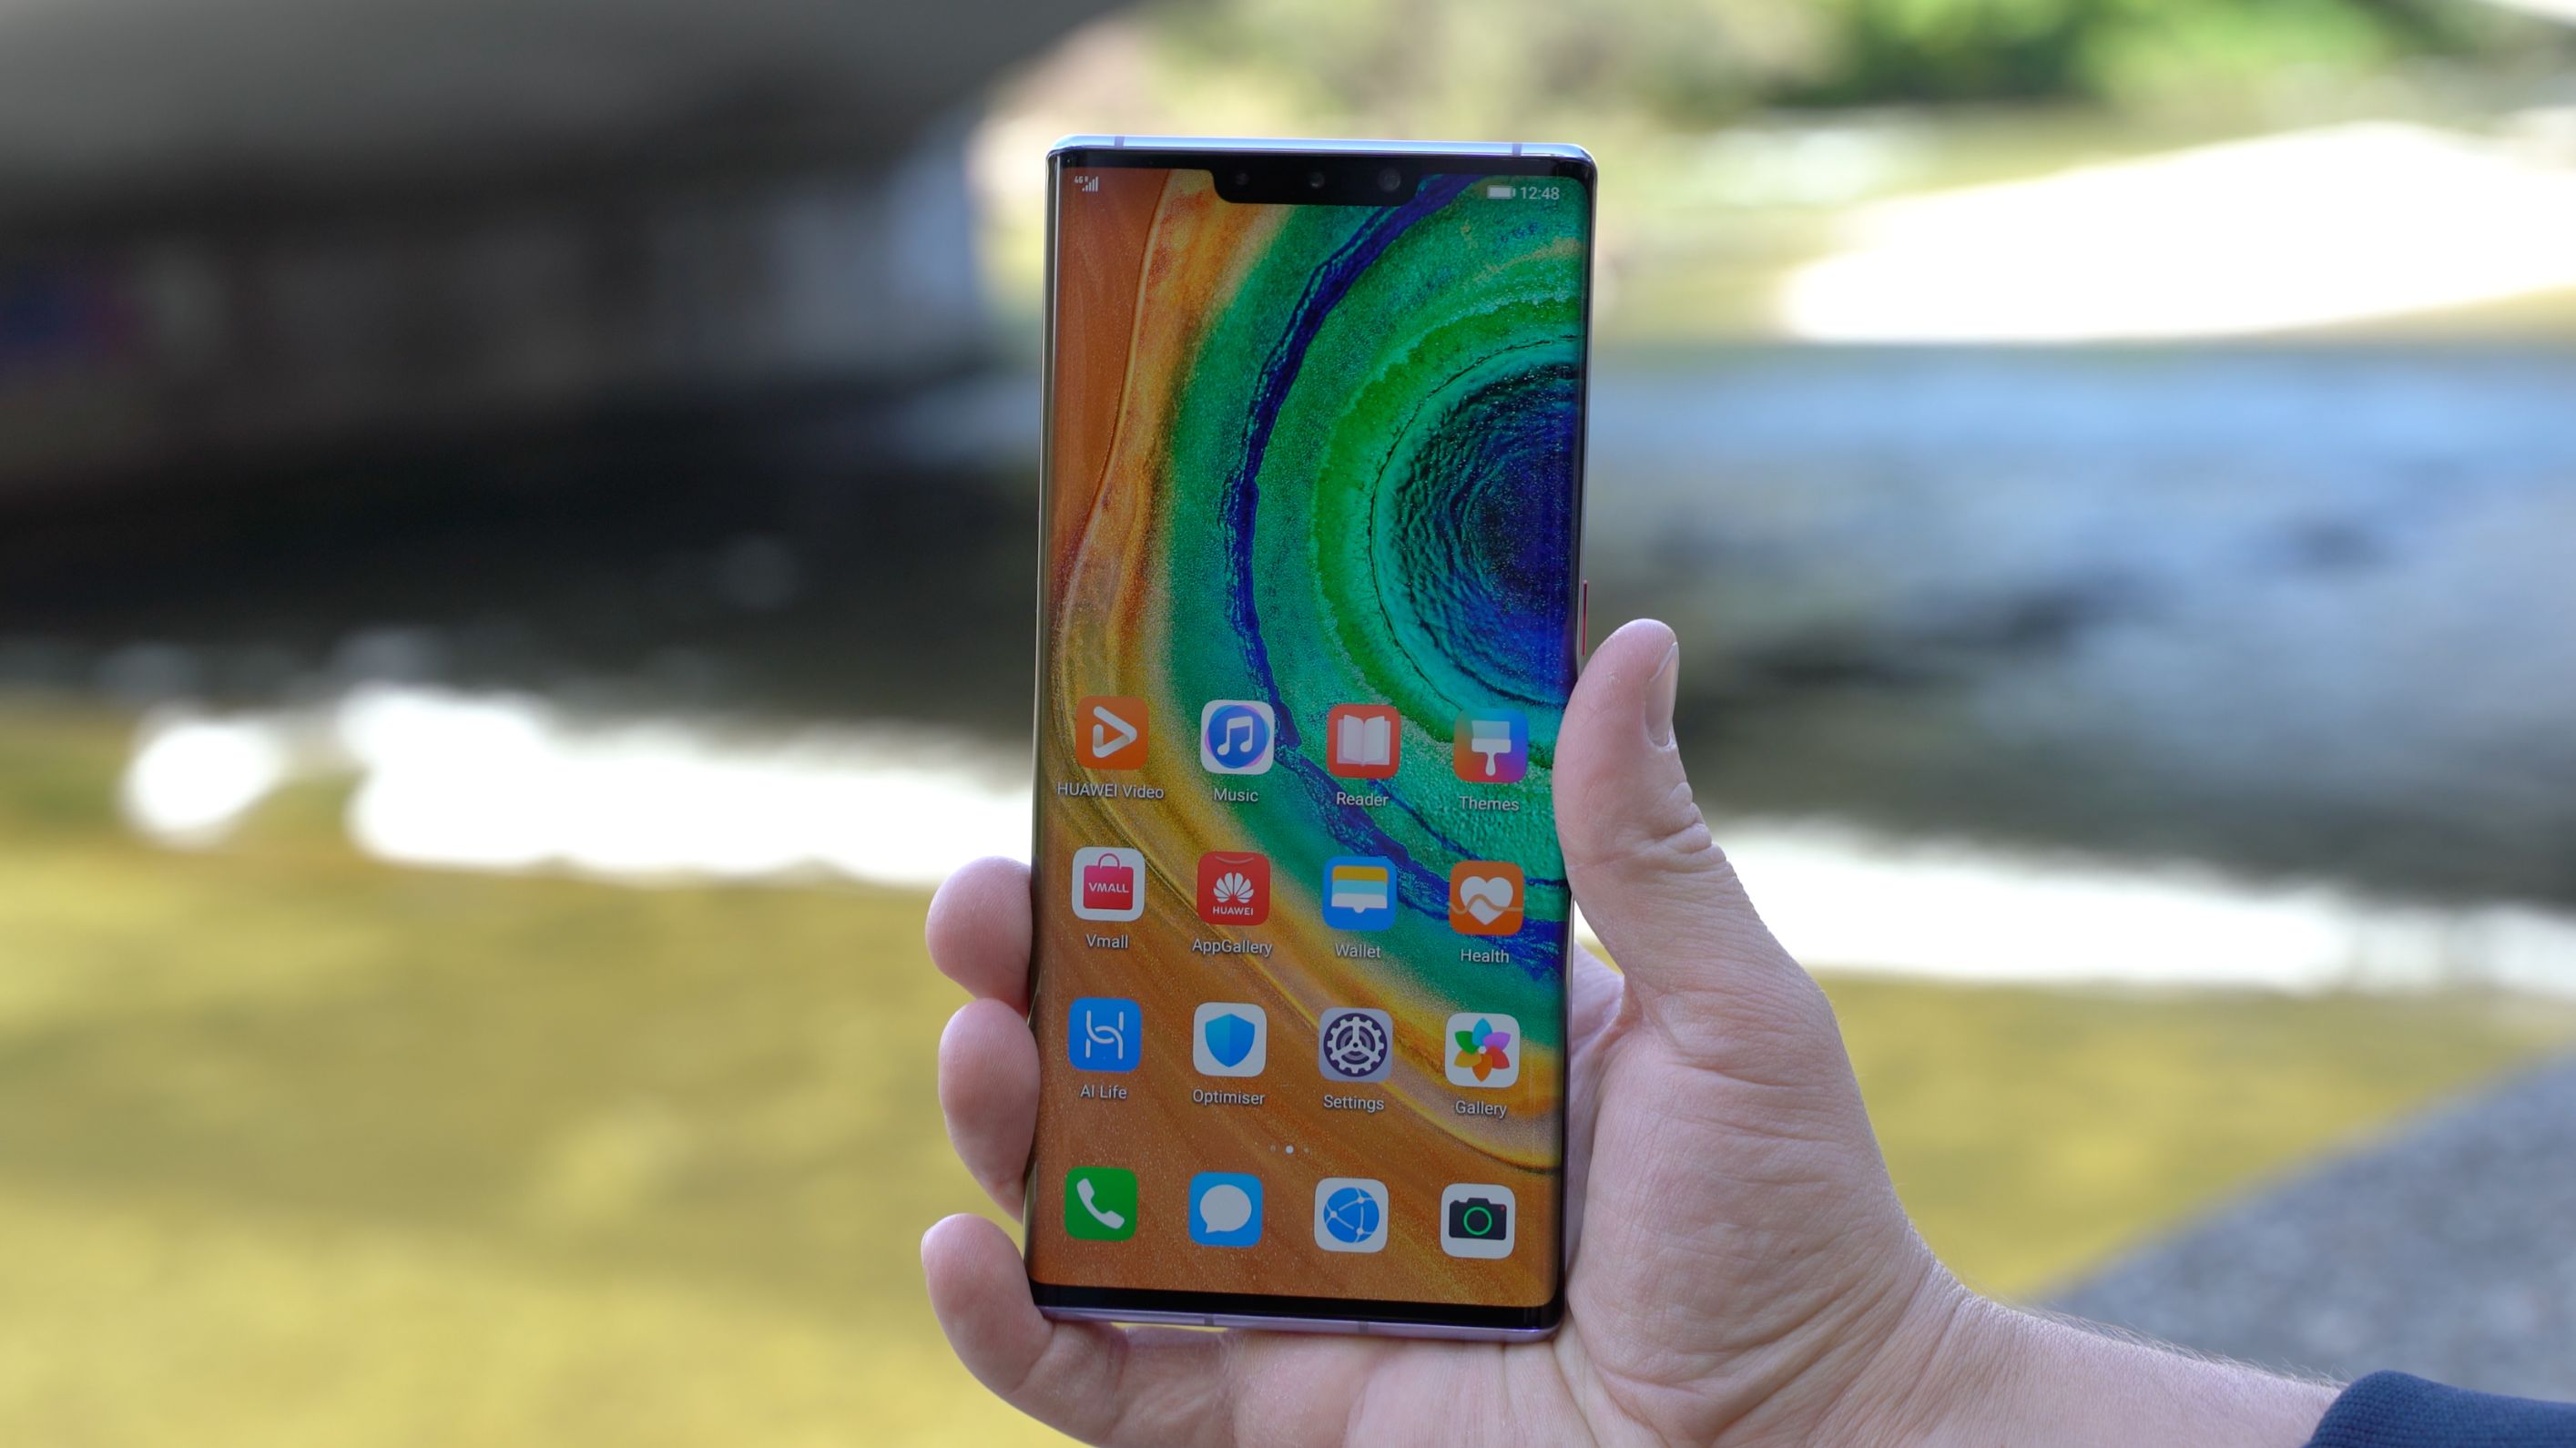 ergens Revolutionair zal ik doen Huawei Mate 30 Pro Review - Killer Flagship Smartphone 2019! - Gizmochina